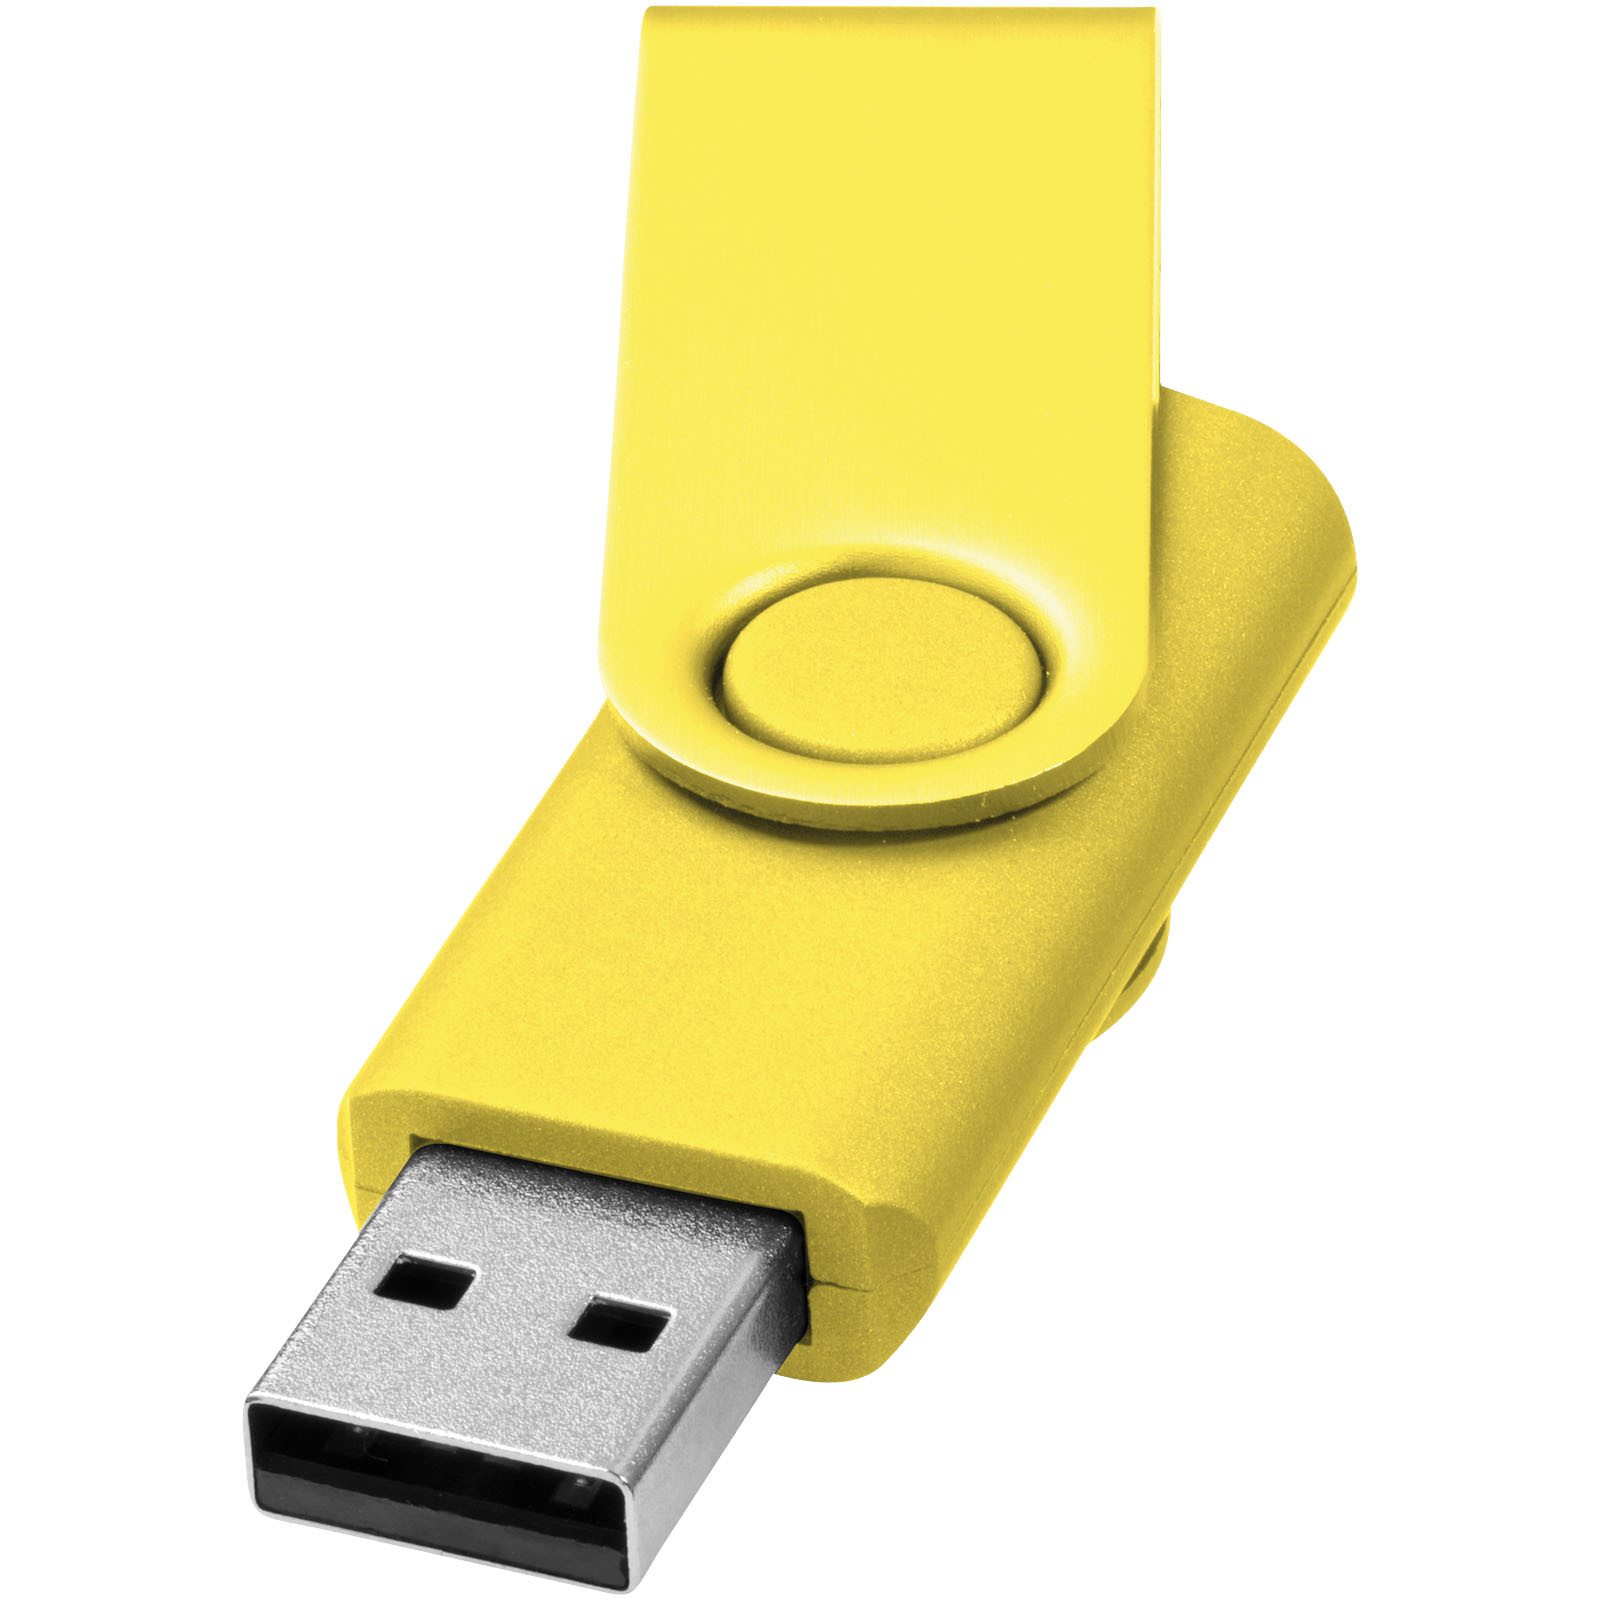 Chiavetta USB Rotate-metallic da 2 GB